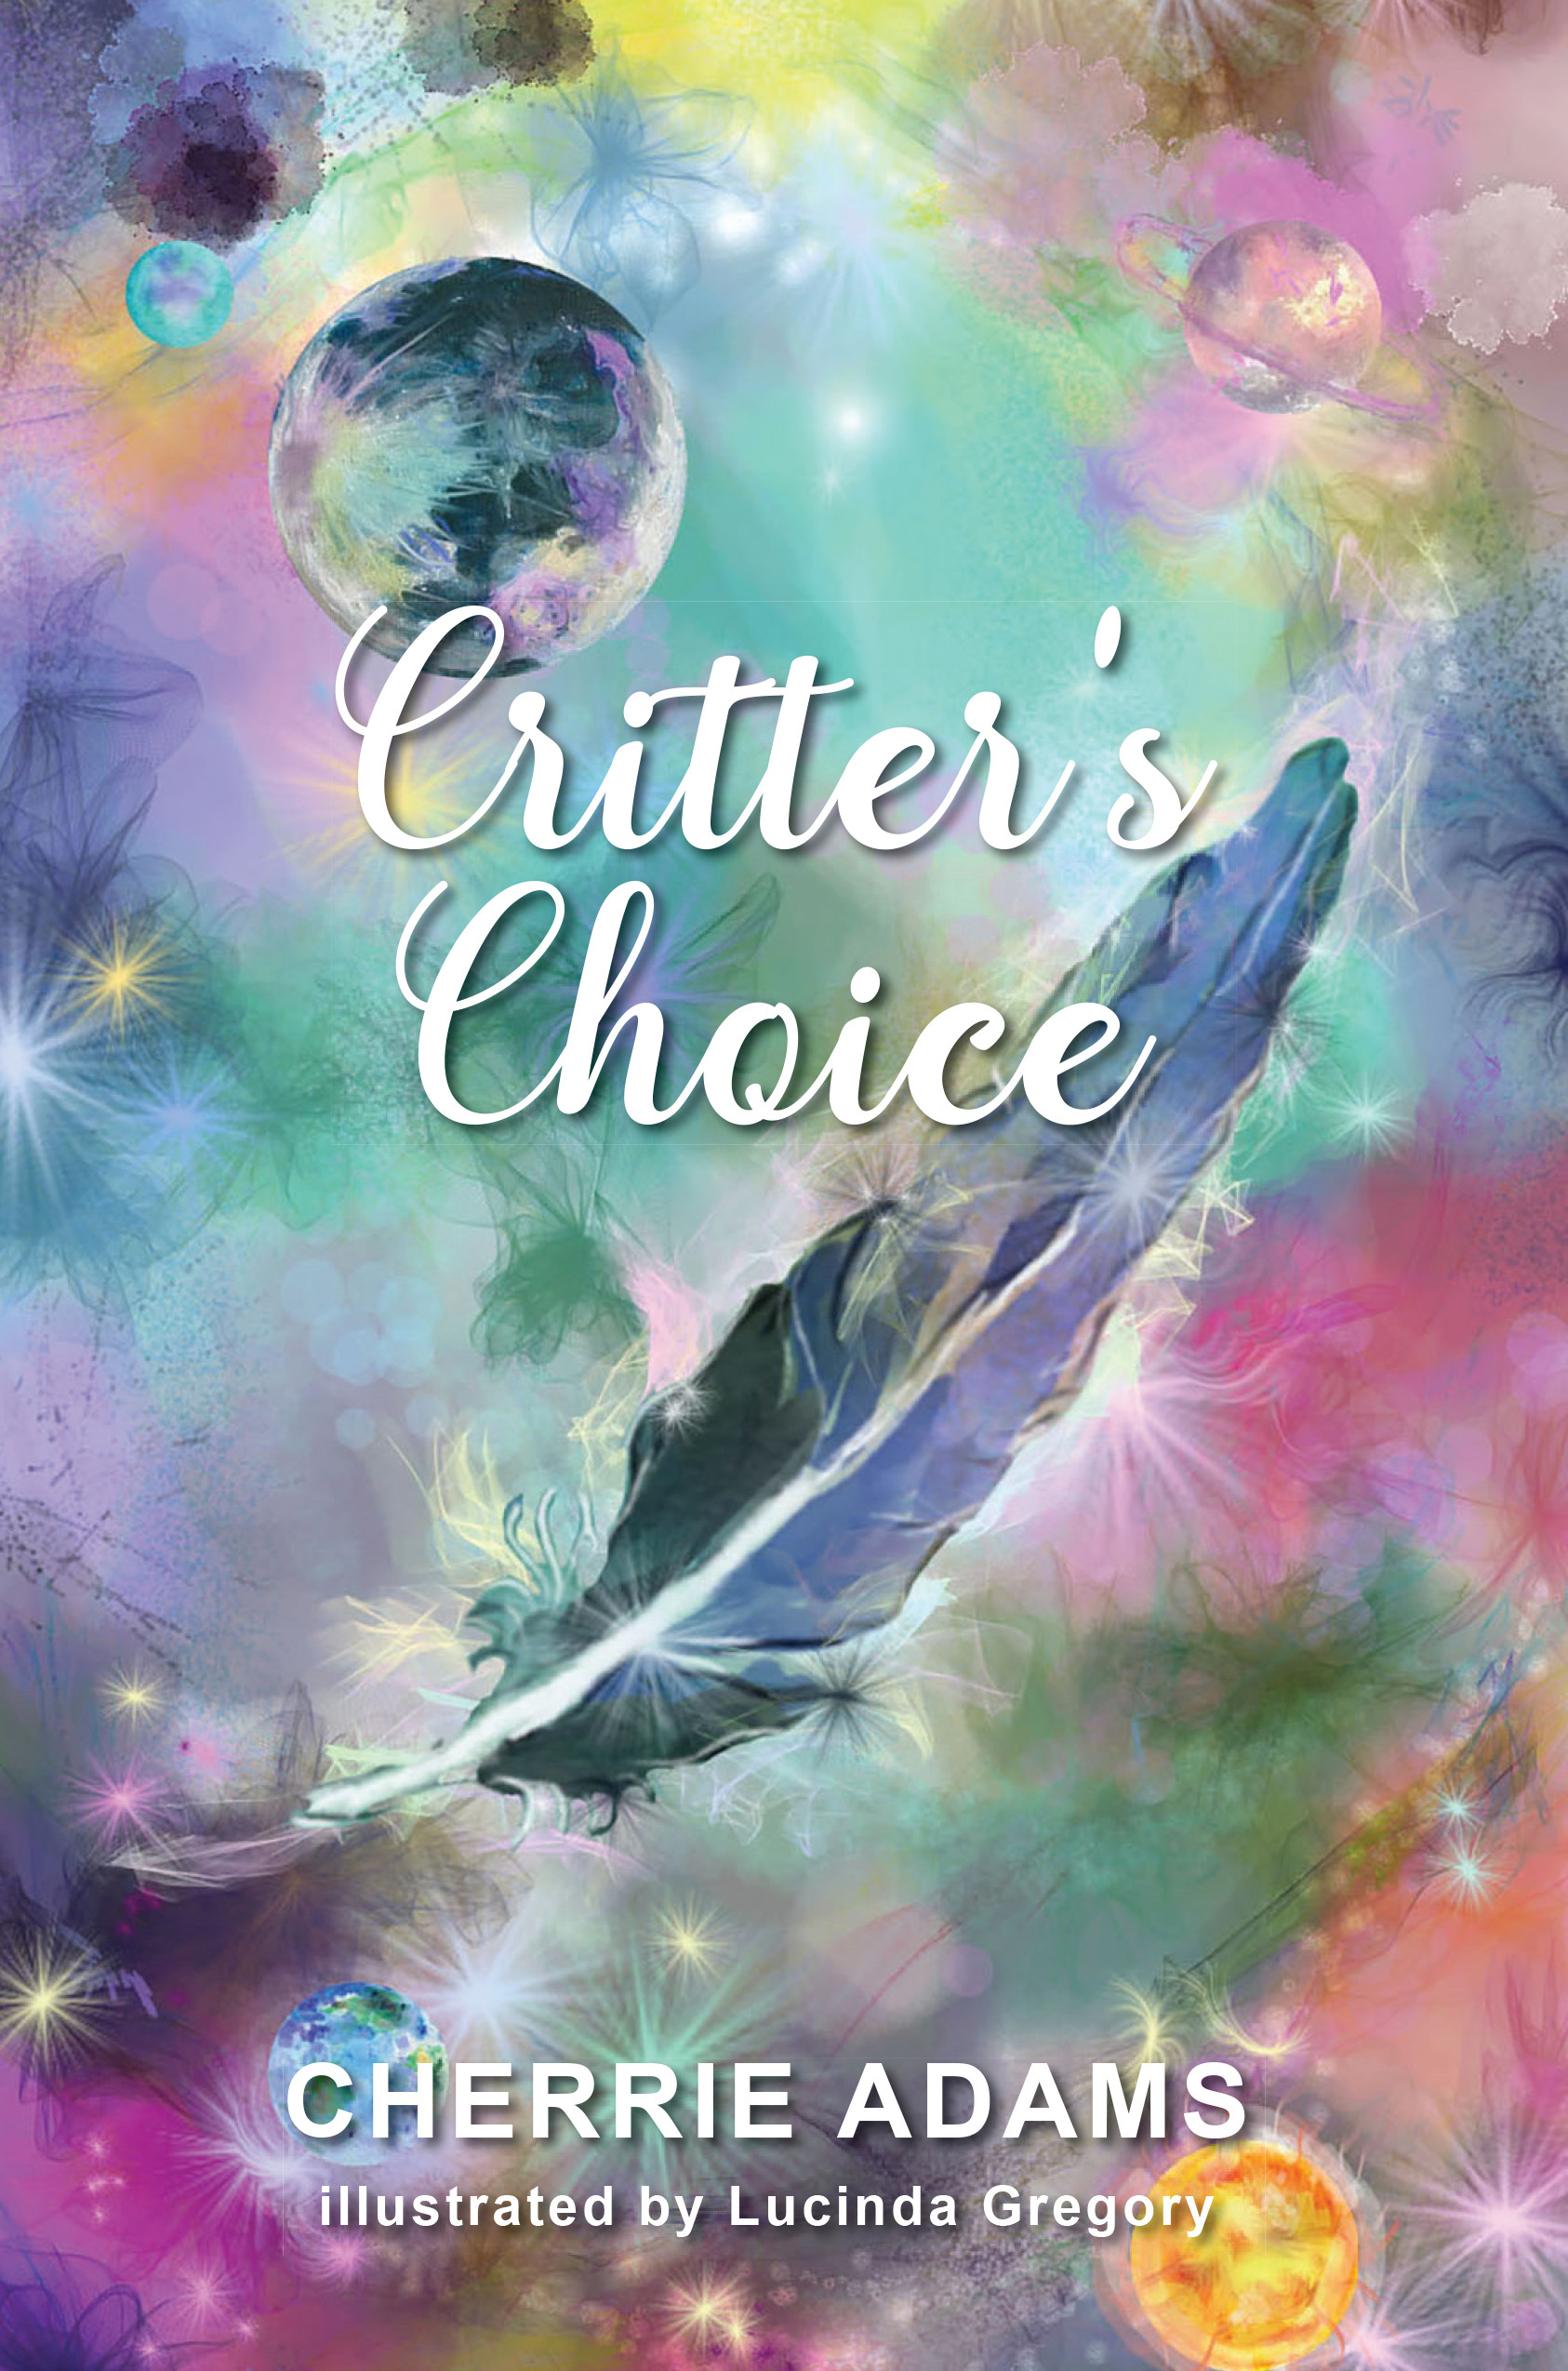 [COVER] Adams, Cherrie - Critters Choice (V3).jpg (2.12 MB)